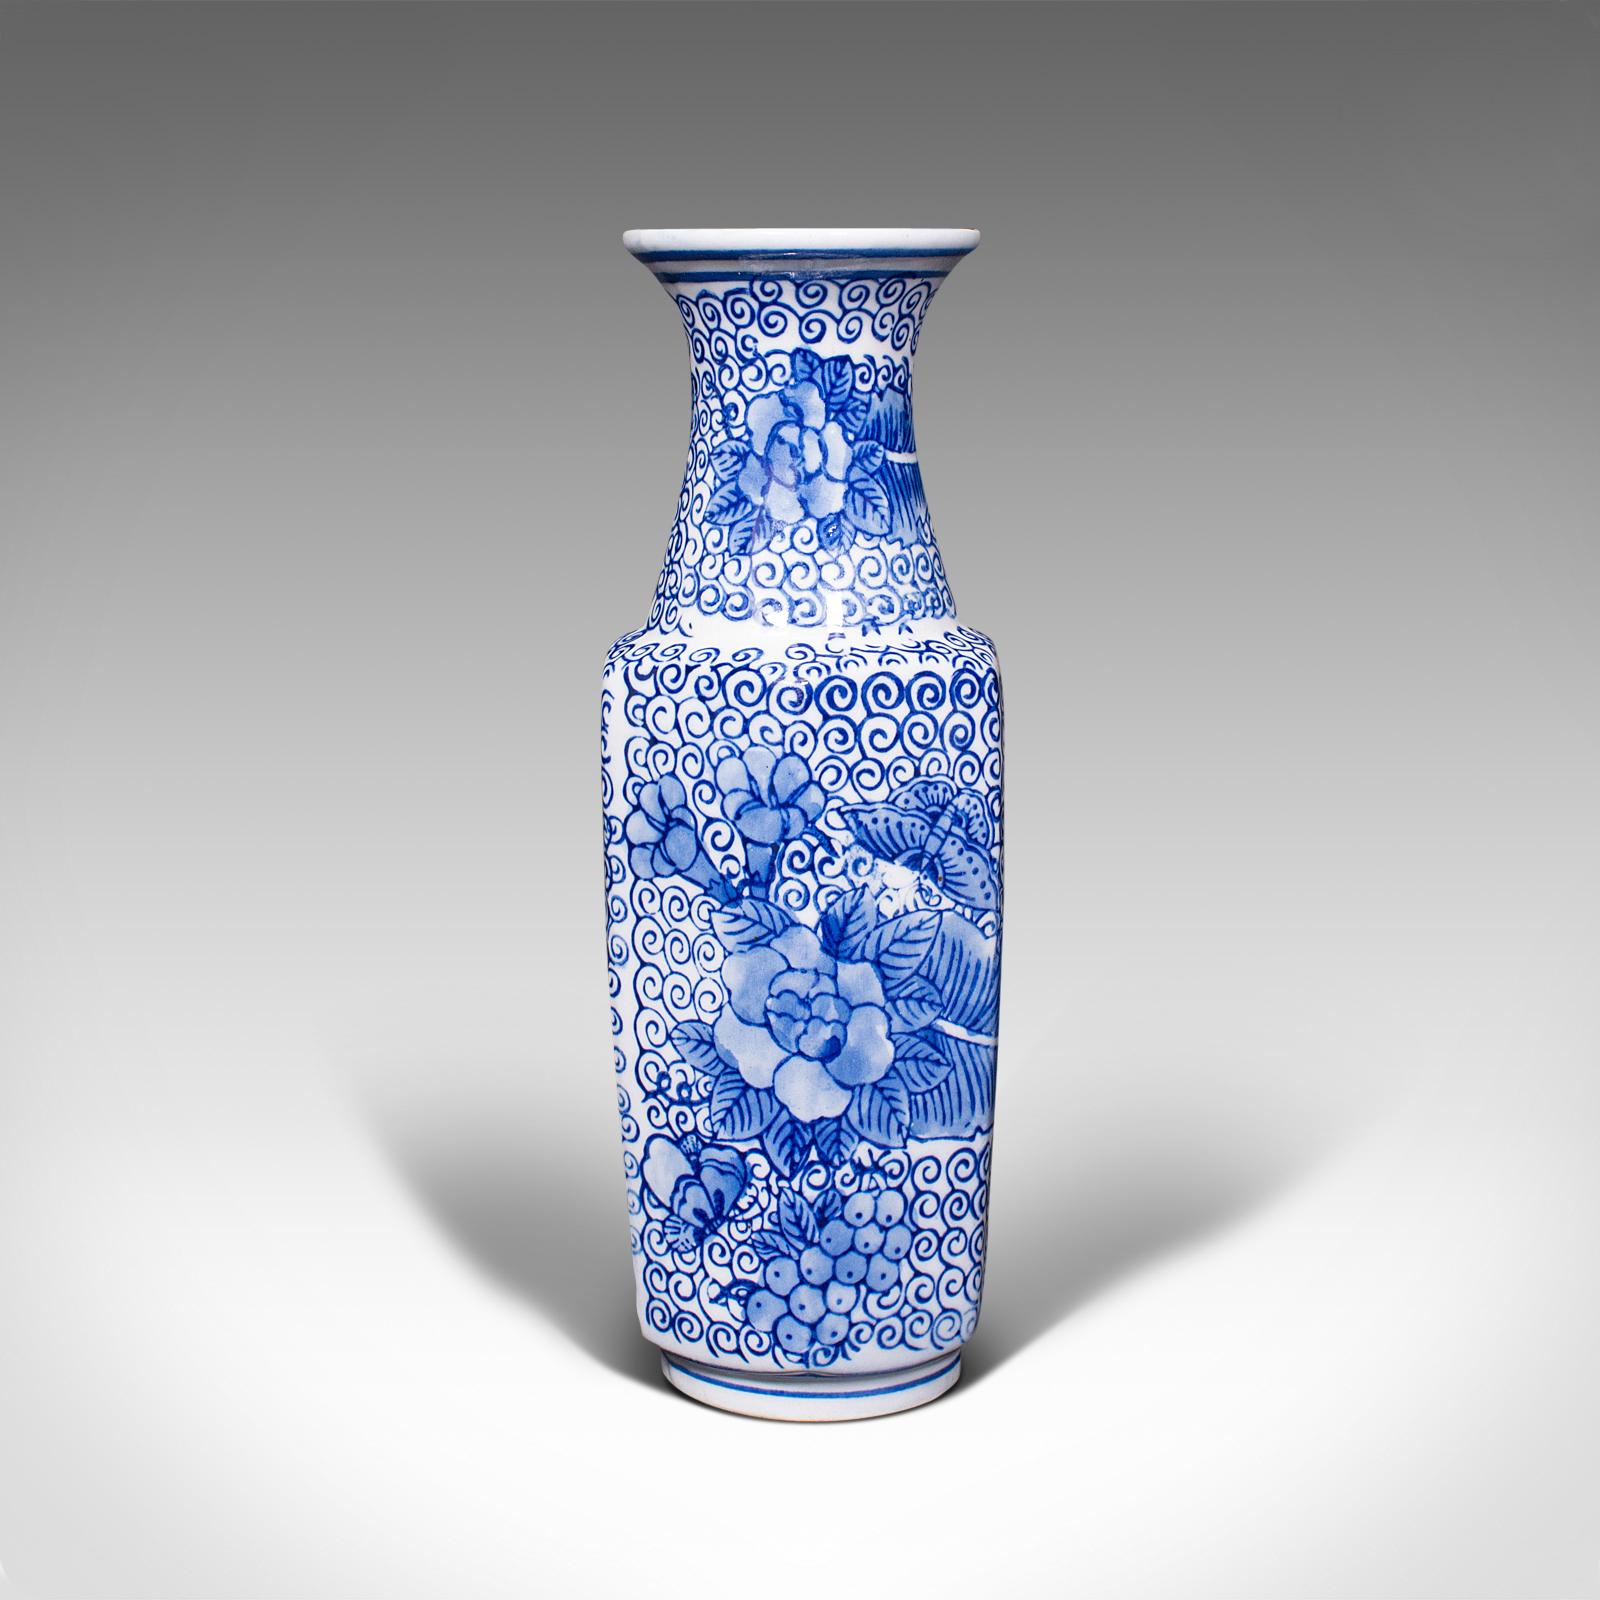 20th Century Vintage Posy Vase, Japanese, Ceramic, Flower, After Delft, Art Deco, circa 1940